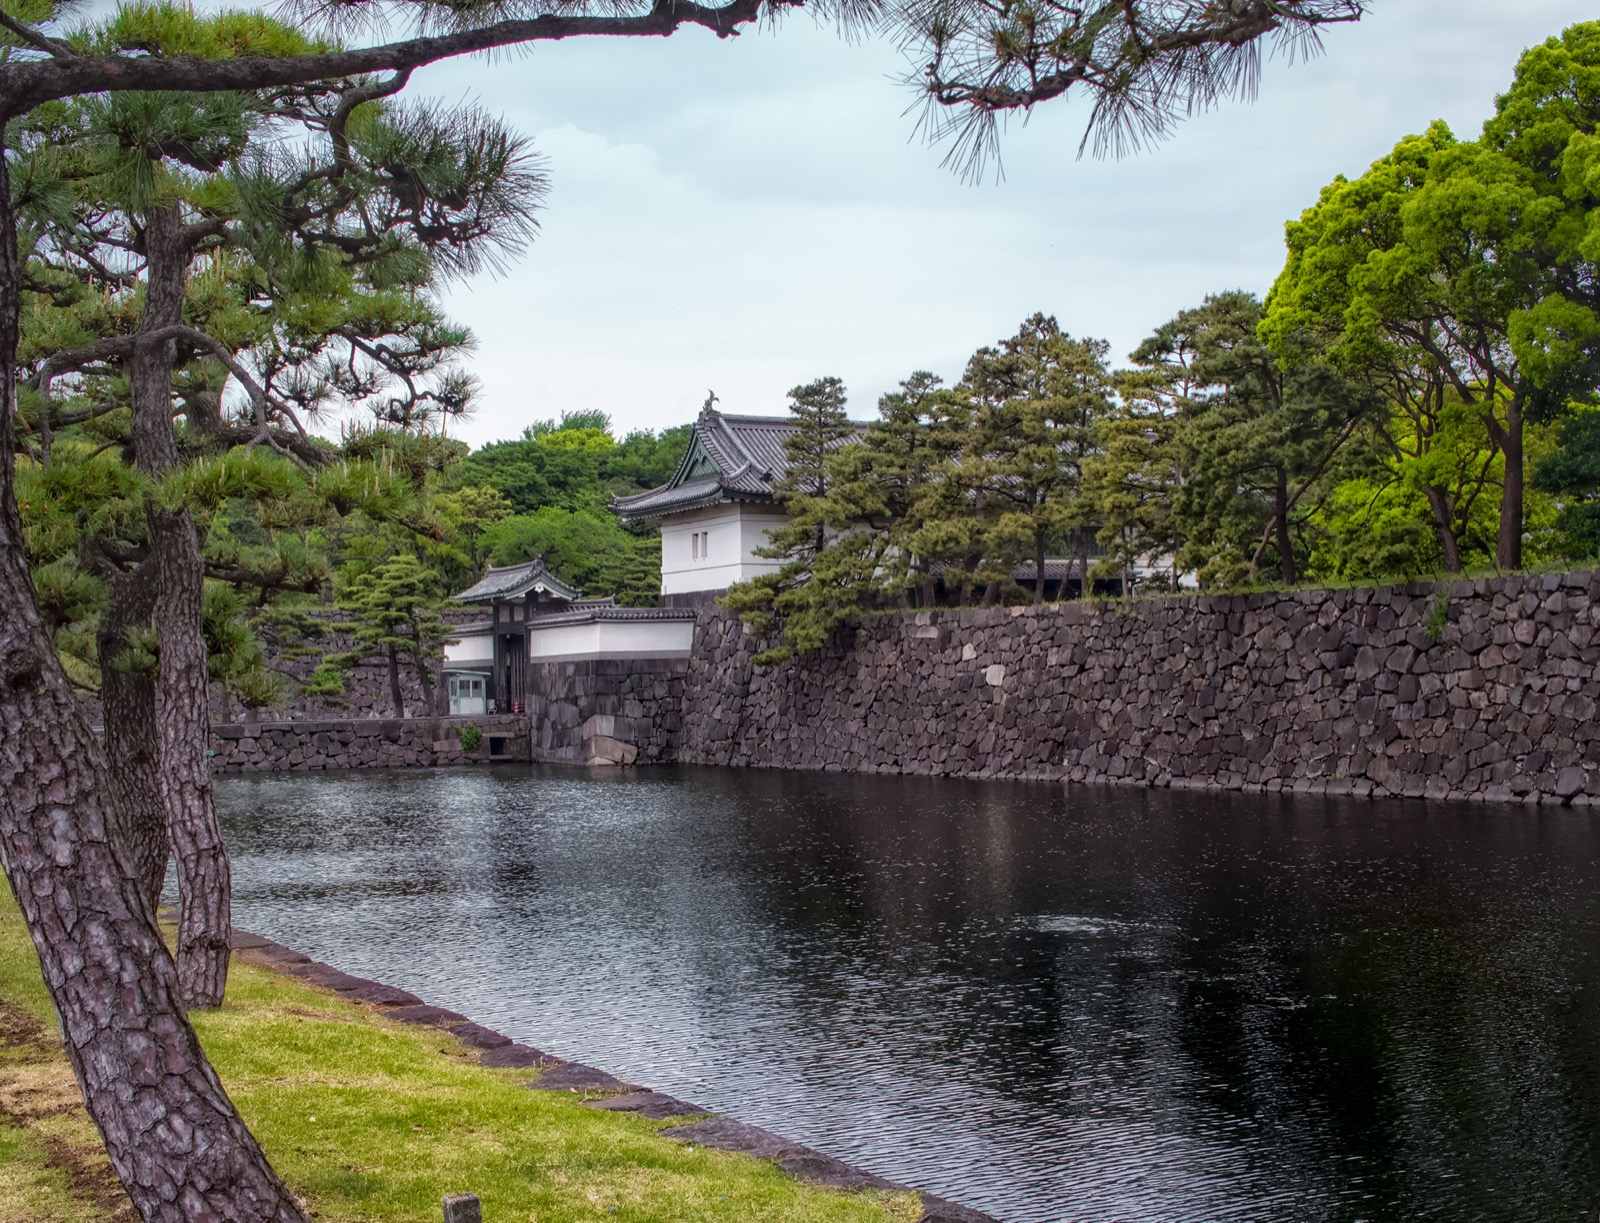 Photo of Marunouchi, Japan (Kikyo-mon Gate, Imperial Palace, Tokyo by Ray in Manila)